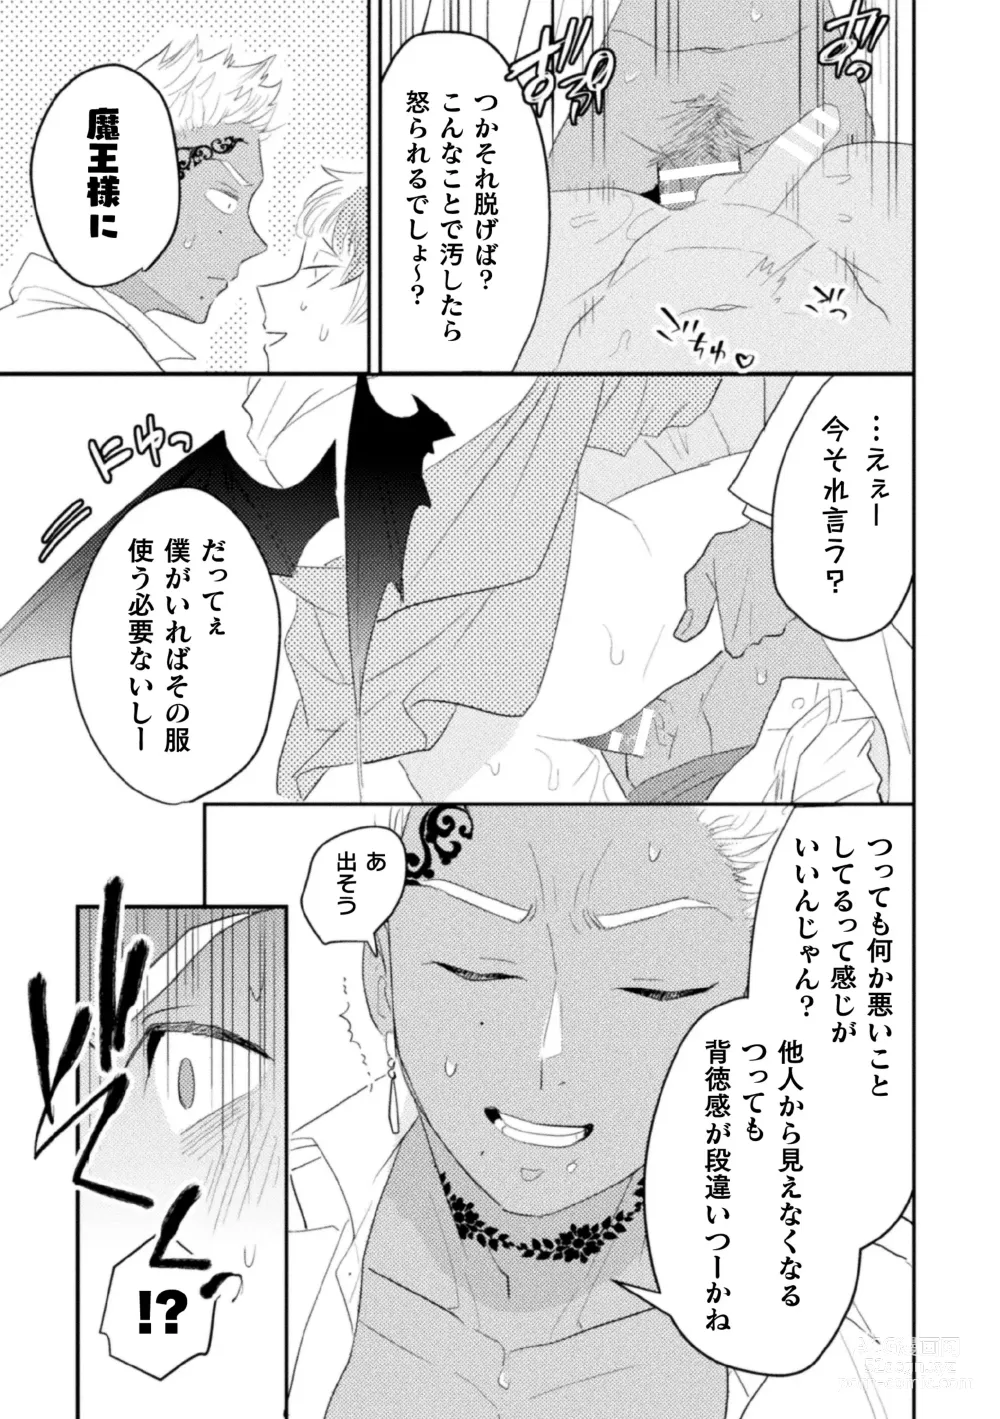 Page 7 of manga Zekkai Rougoku 4 Zekkai no Ori to Inma no Wana